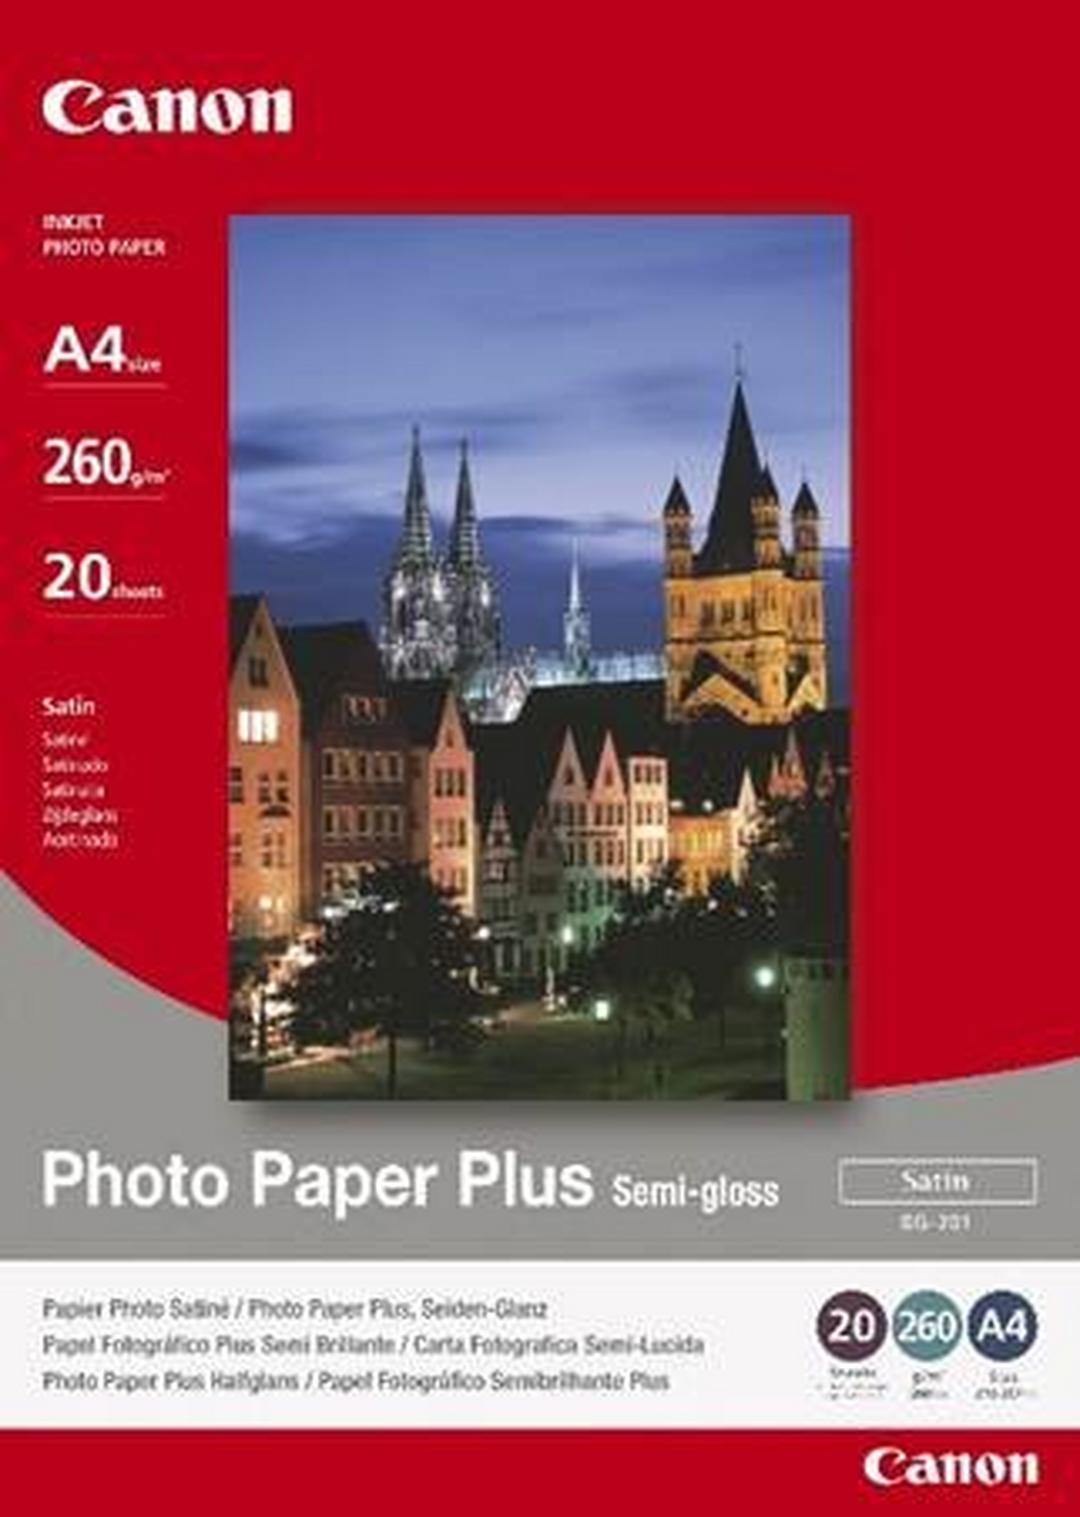 Canon SG-201 Photo Paper Plus Semi-Gloss -20 papers